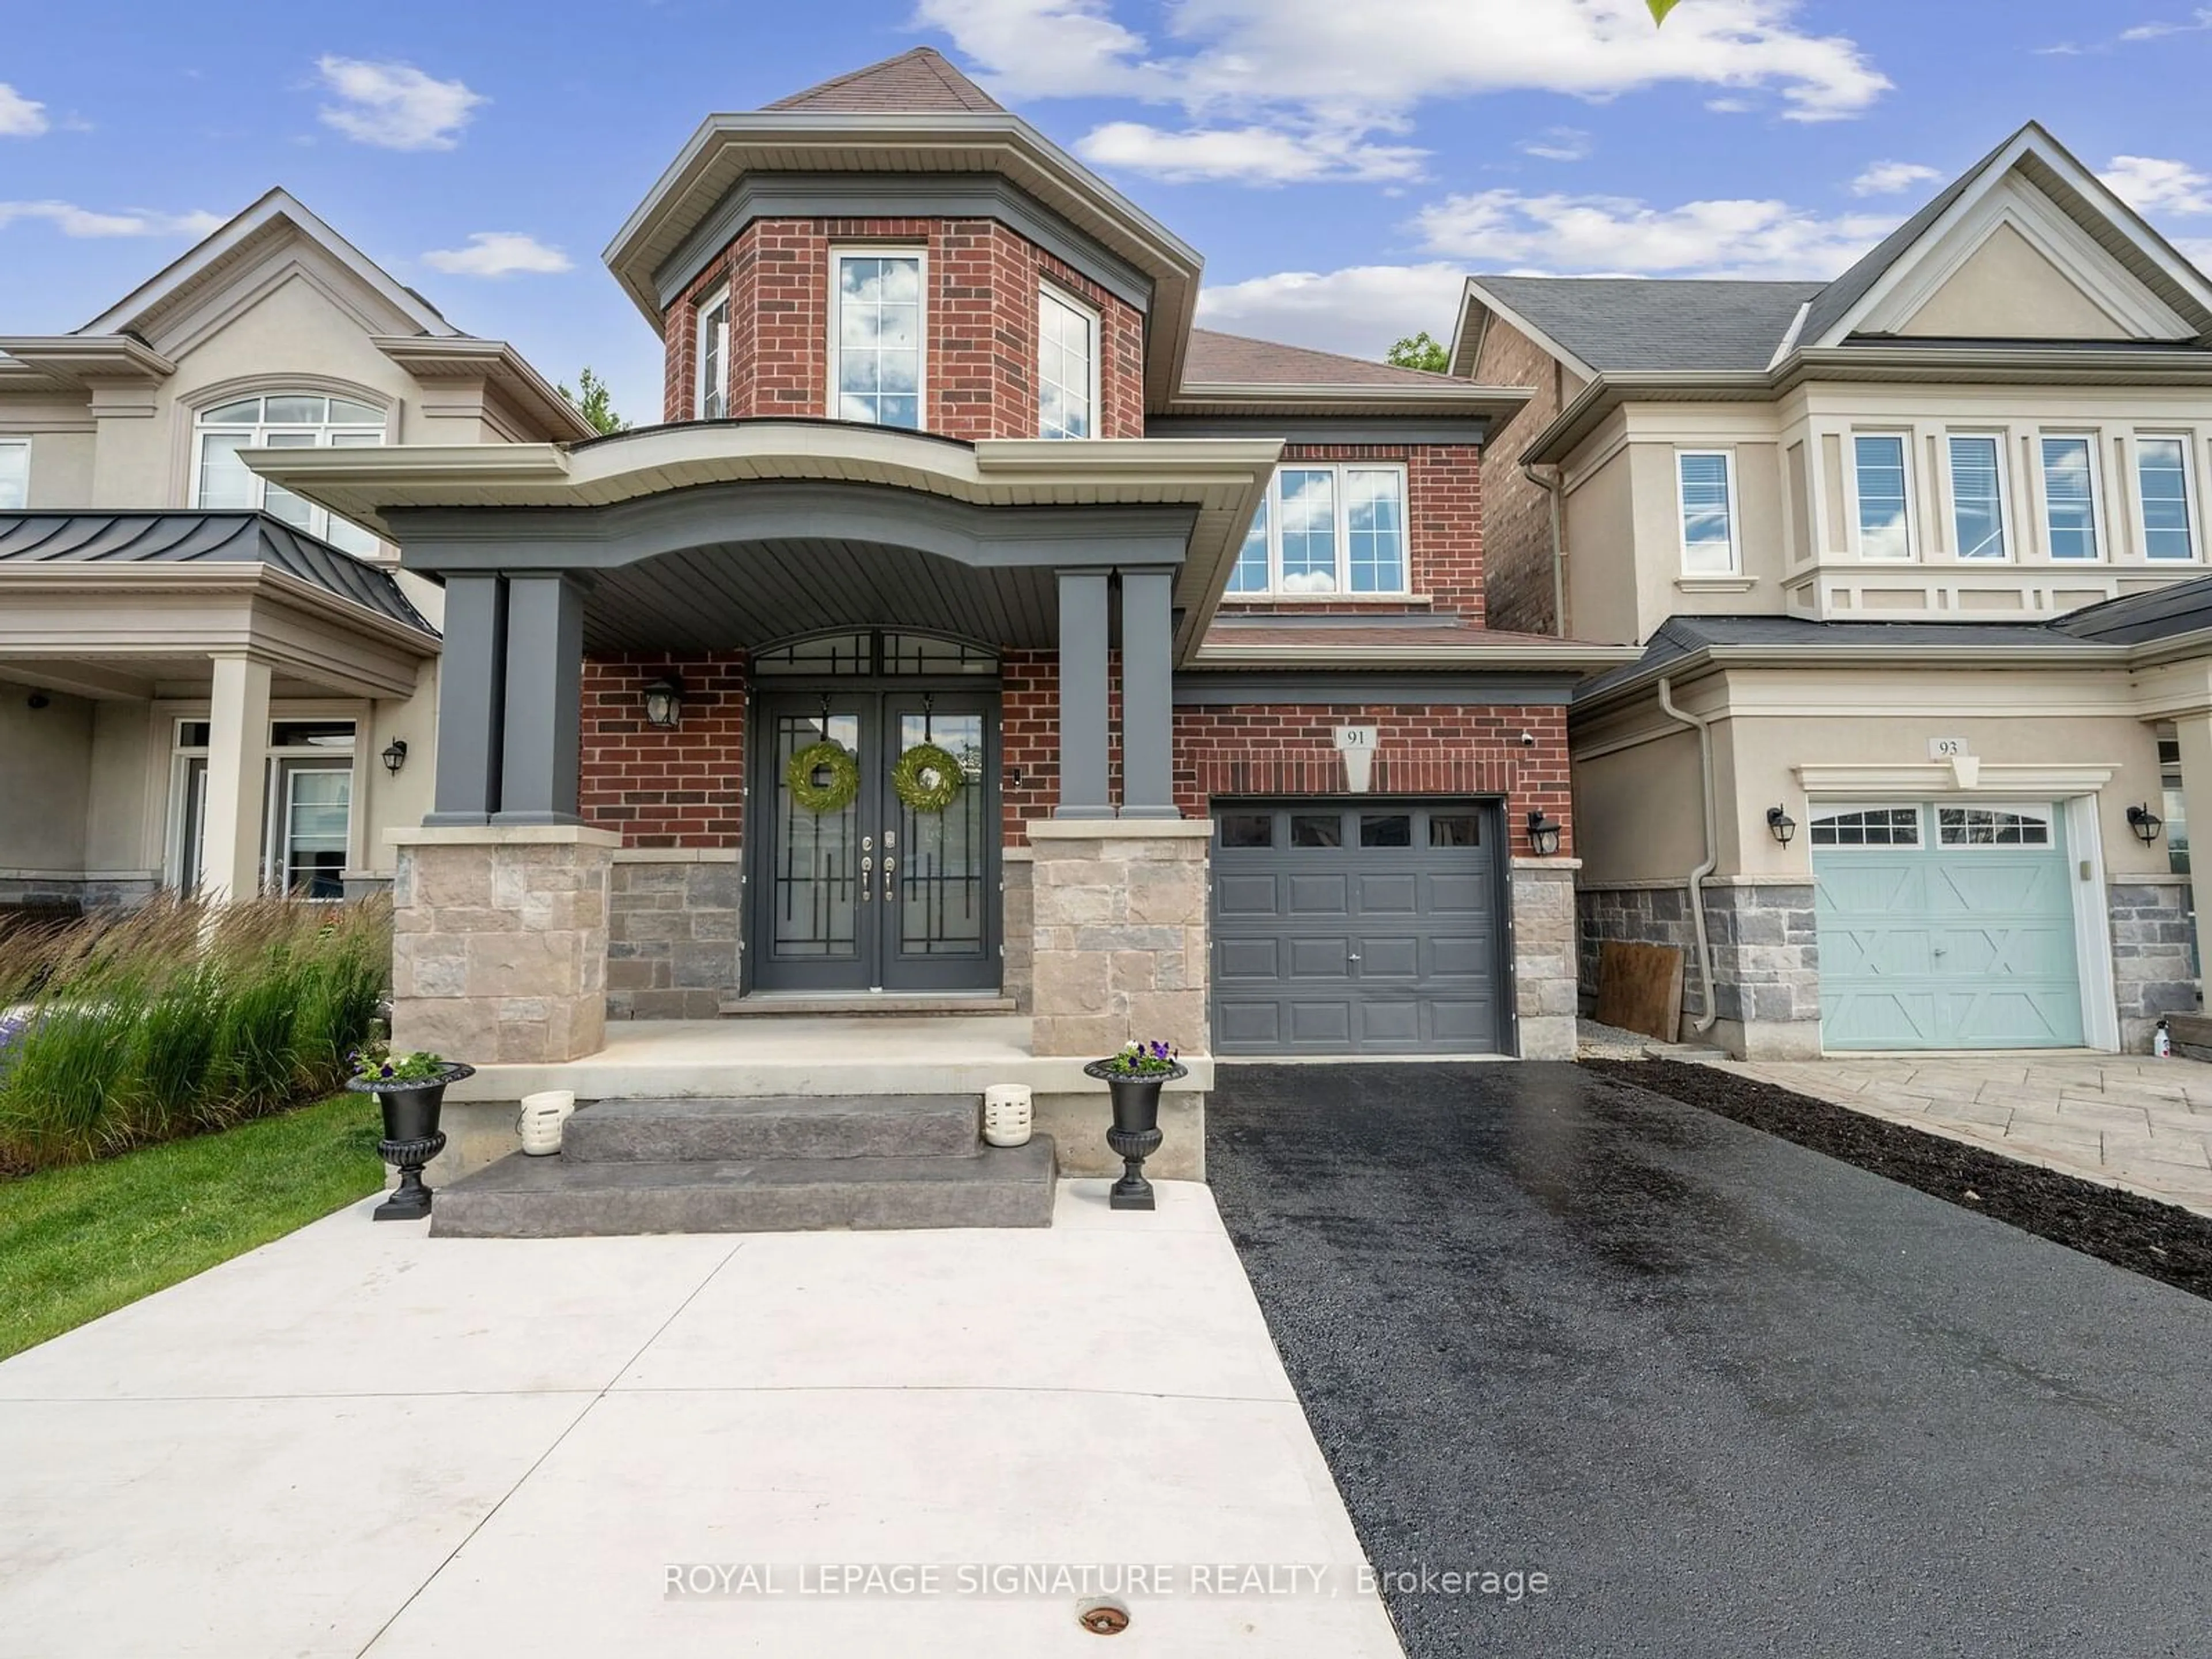 Home with brick exterior material for 91 Upper Canada Crt, Halton Hills Ontario L7G 0L2